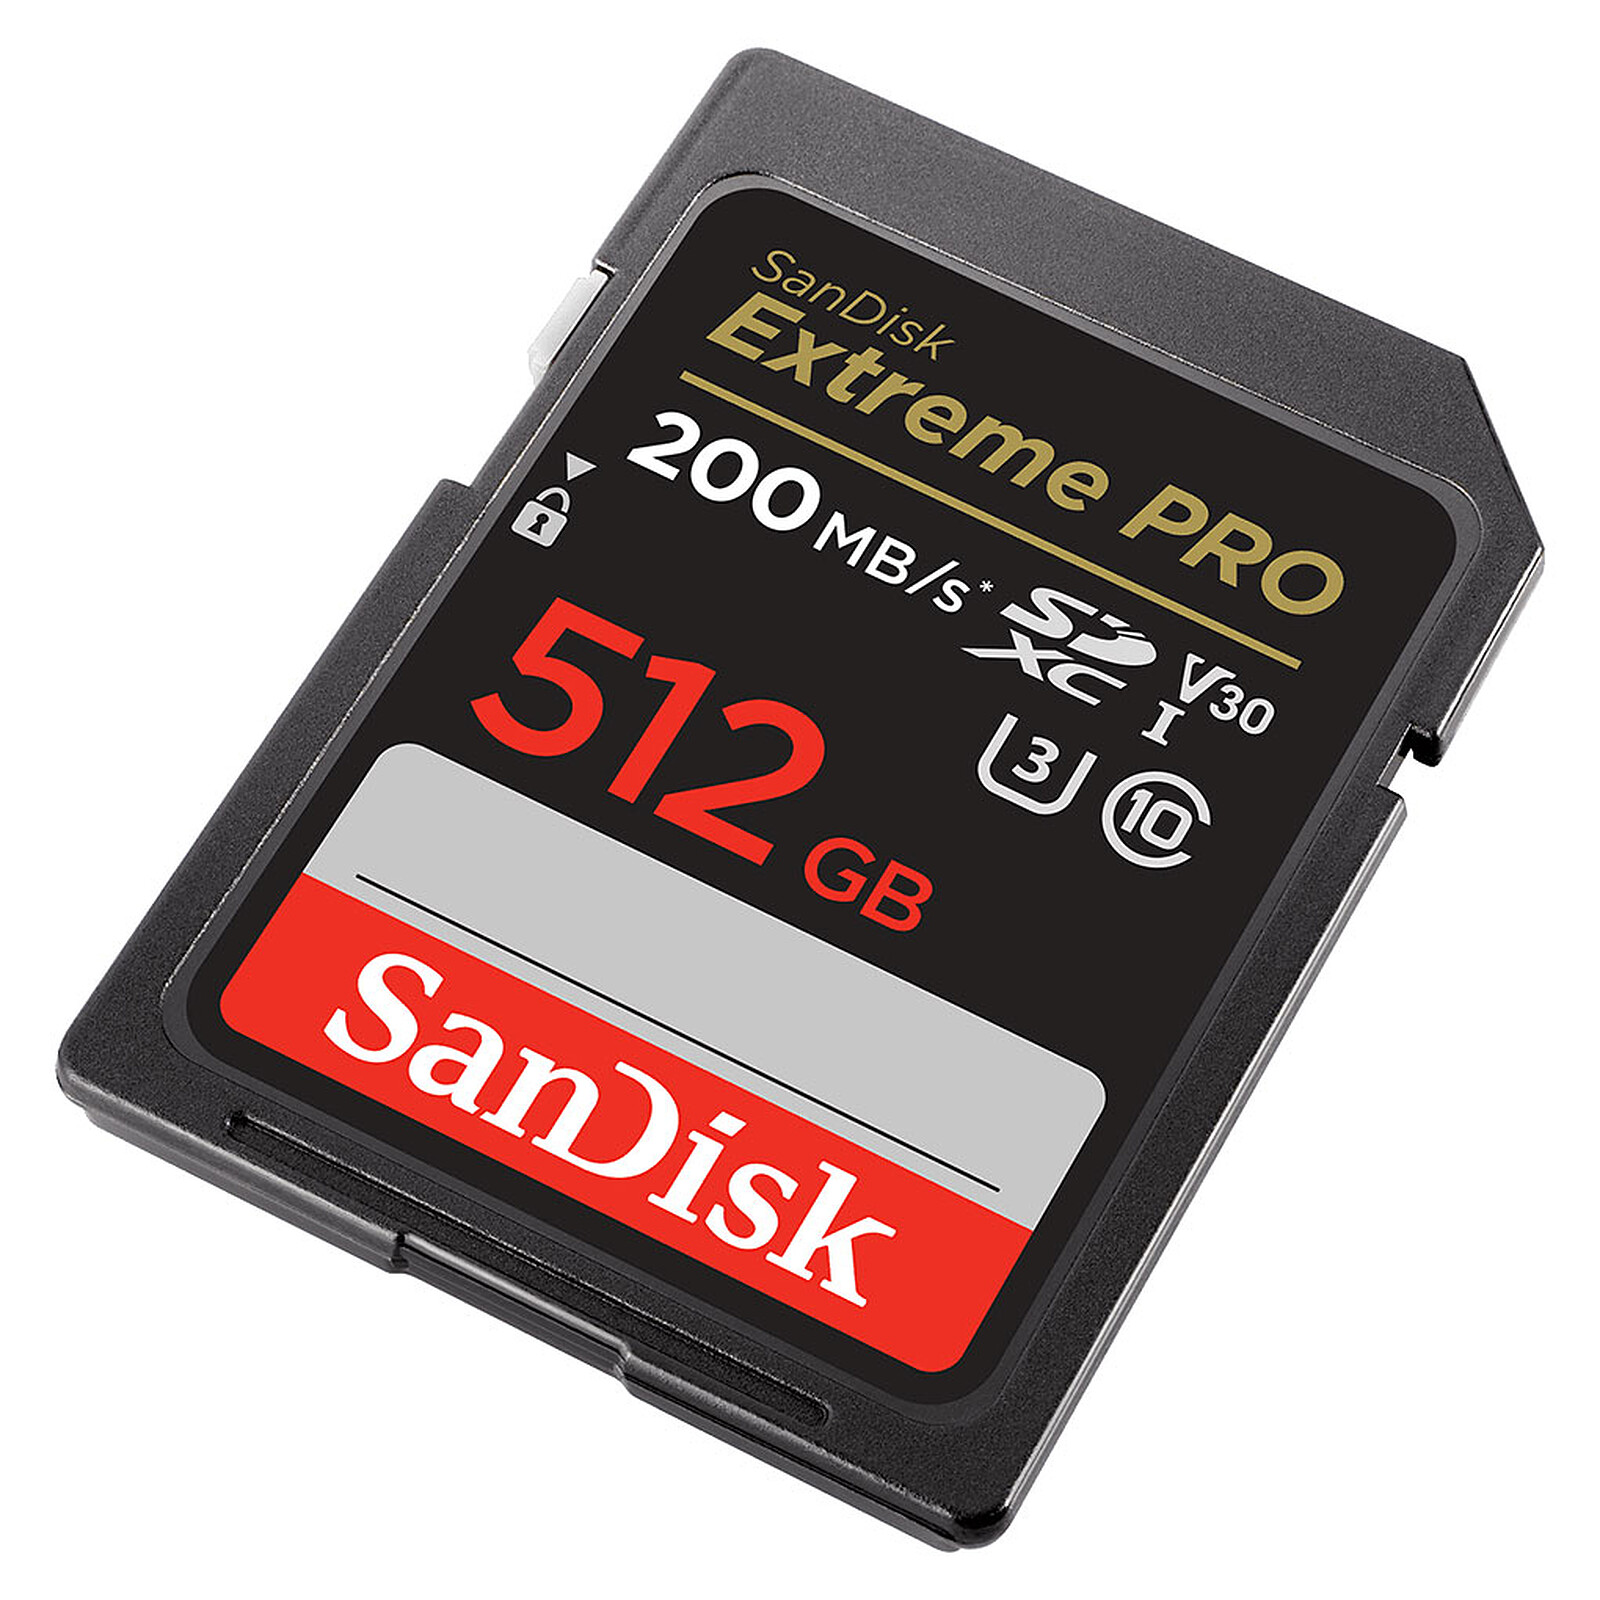 Samsung EVO Plus microSD 512 Go - Carte mémoire - Garantie 3 ans LDLC